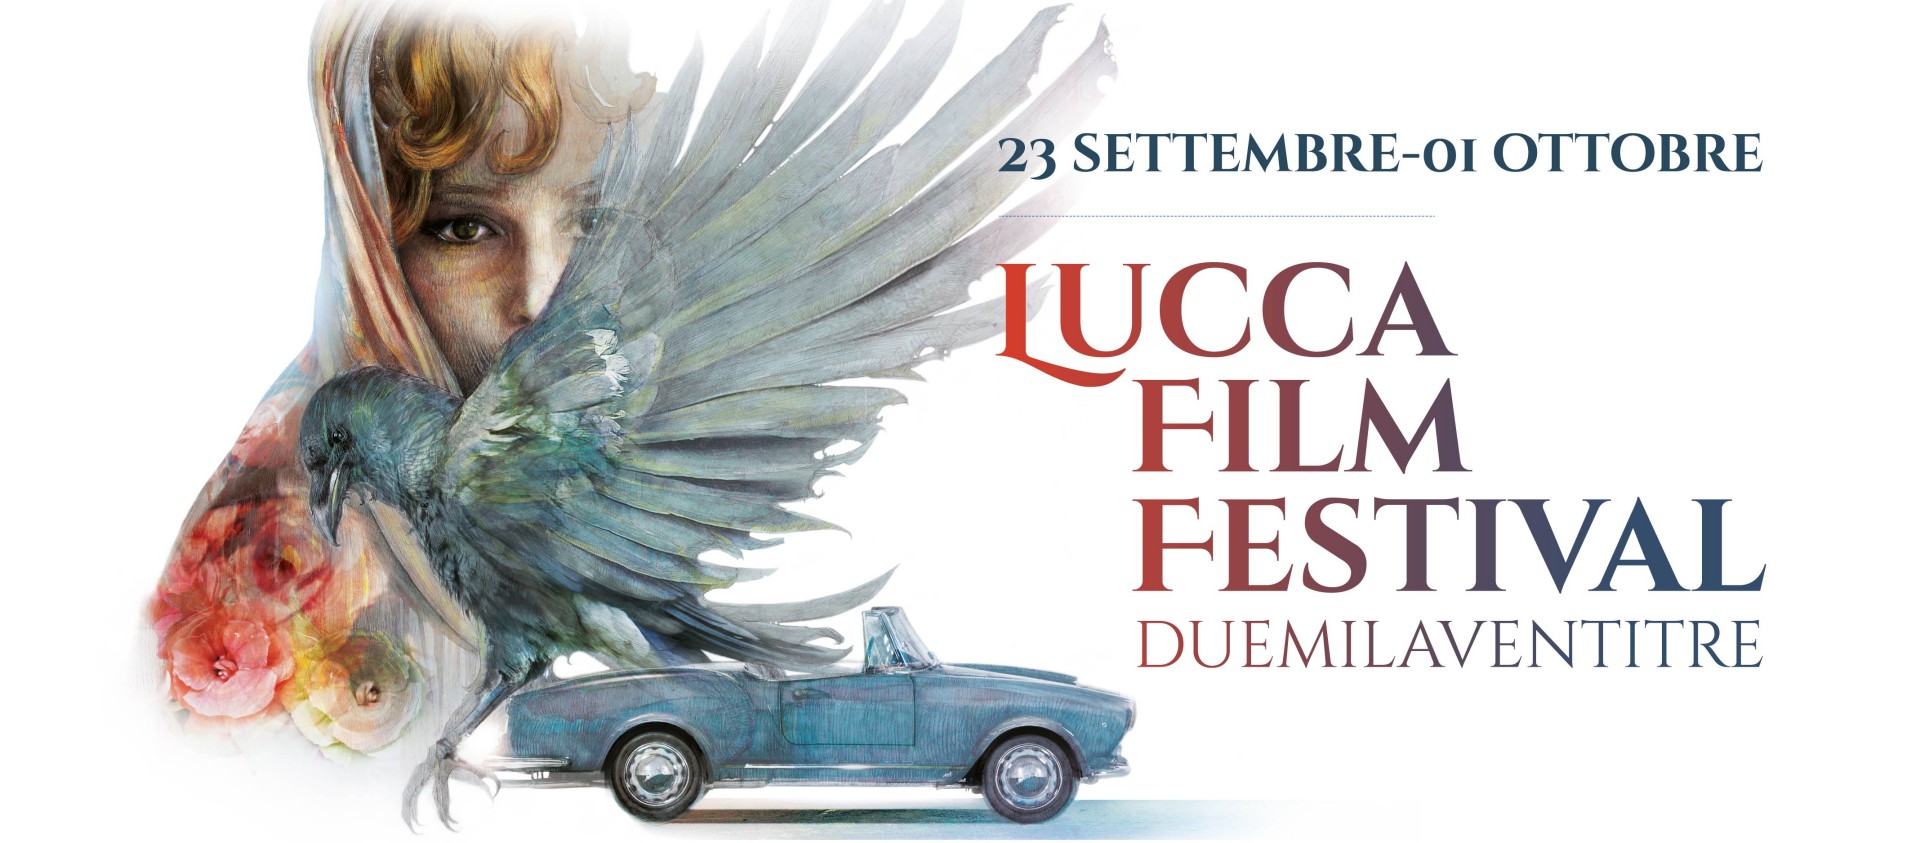 Lucca Film Festival: Susan Sarandon, Isabelle Huppert, Stefania Sandrelli e tanti altri dal 23 settembre al 1 ottobre